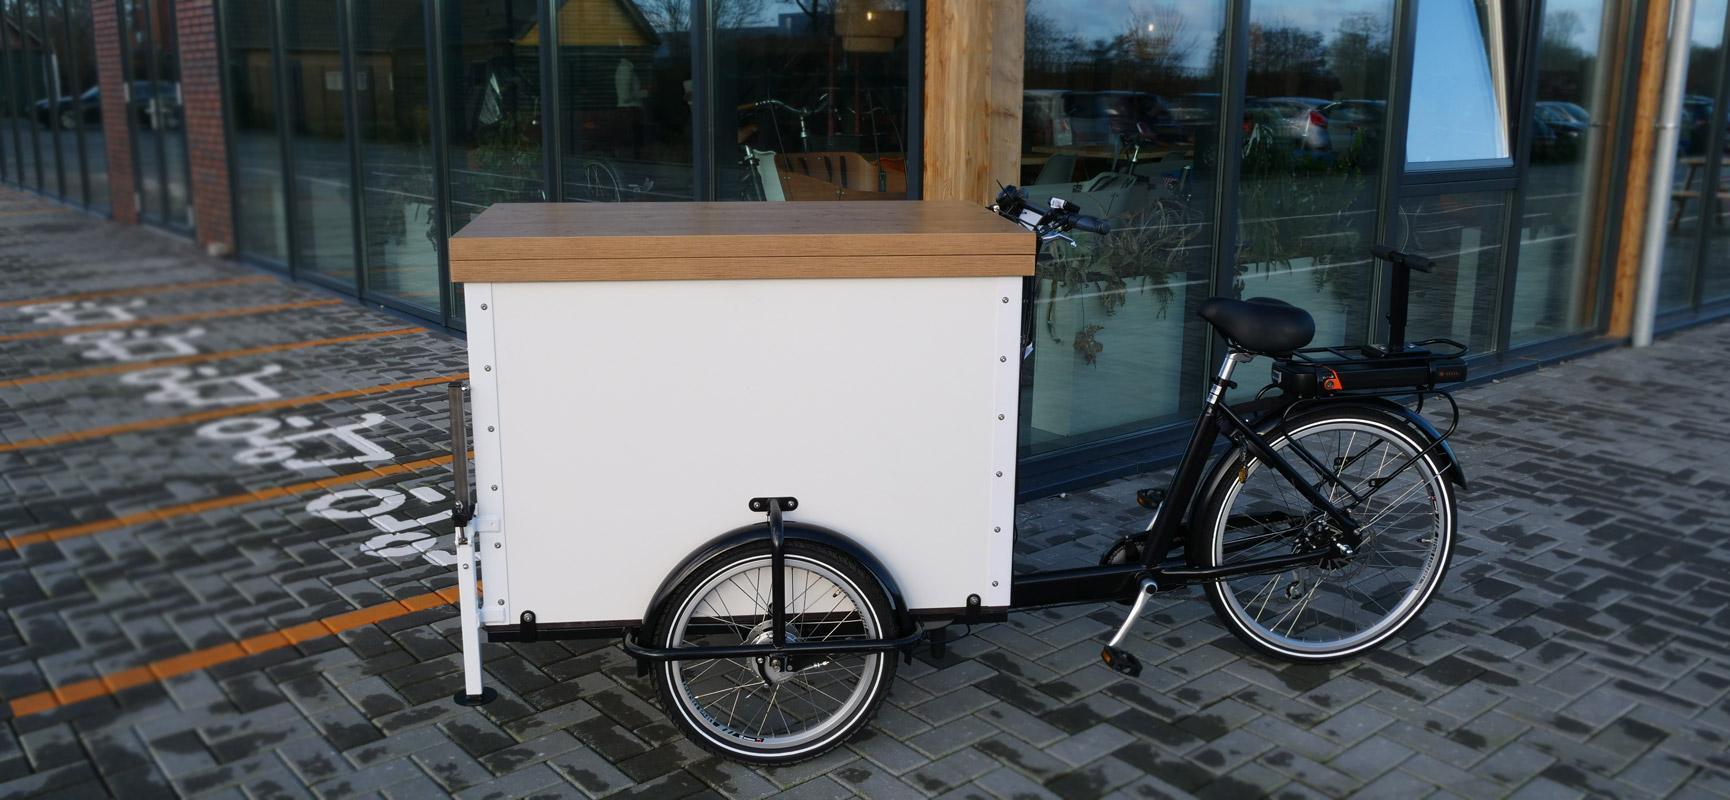 Food truck bikes help innovate businesses